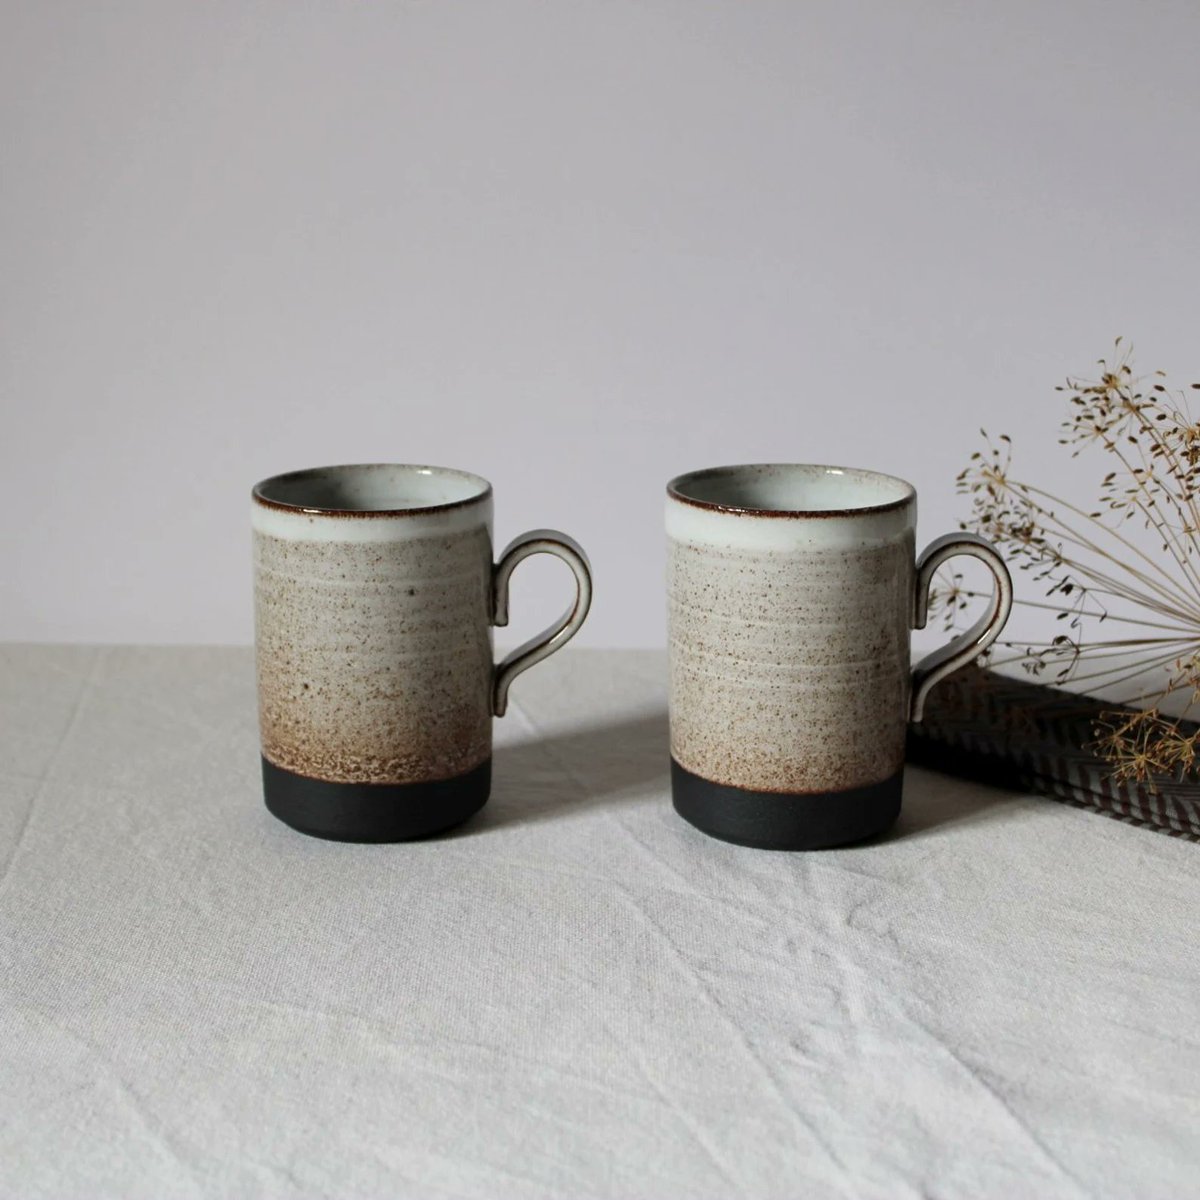 PotsbyNives Set of two Stoneware Black clay mugs
etsy.com/listing/170743…
...
greetingsfromaw.blogspot.com
#ceramic #pottery